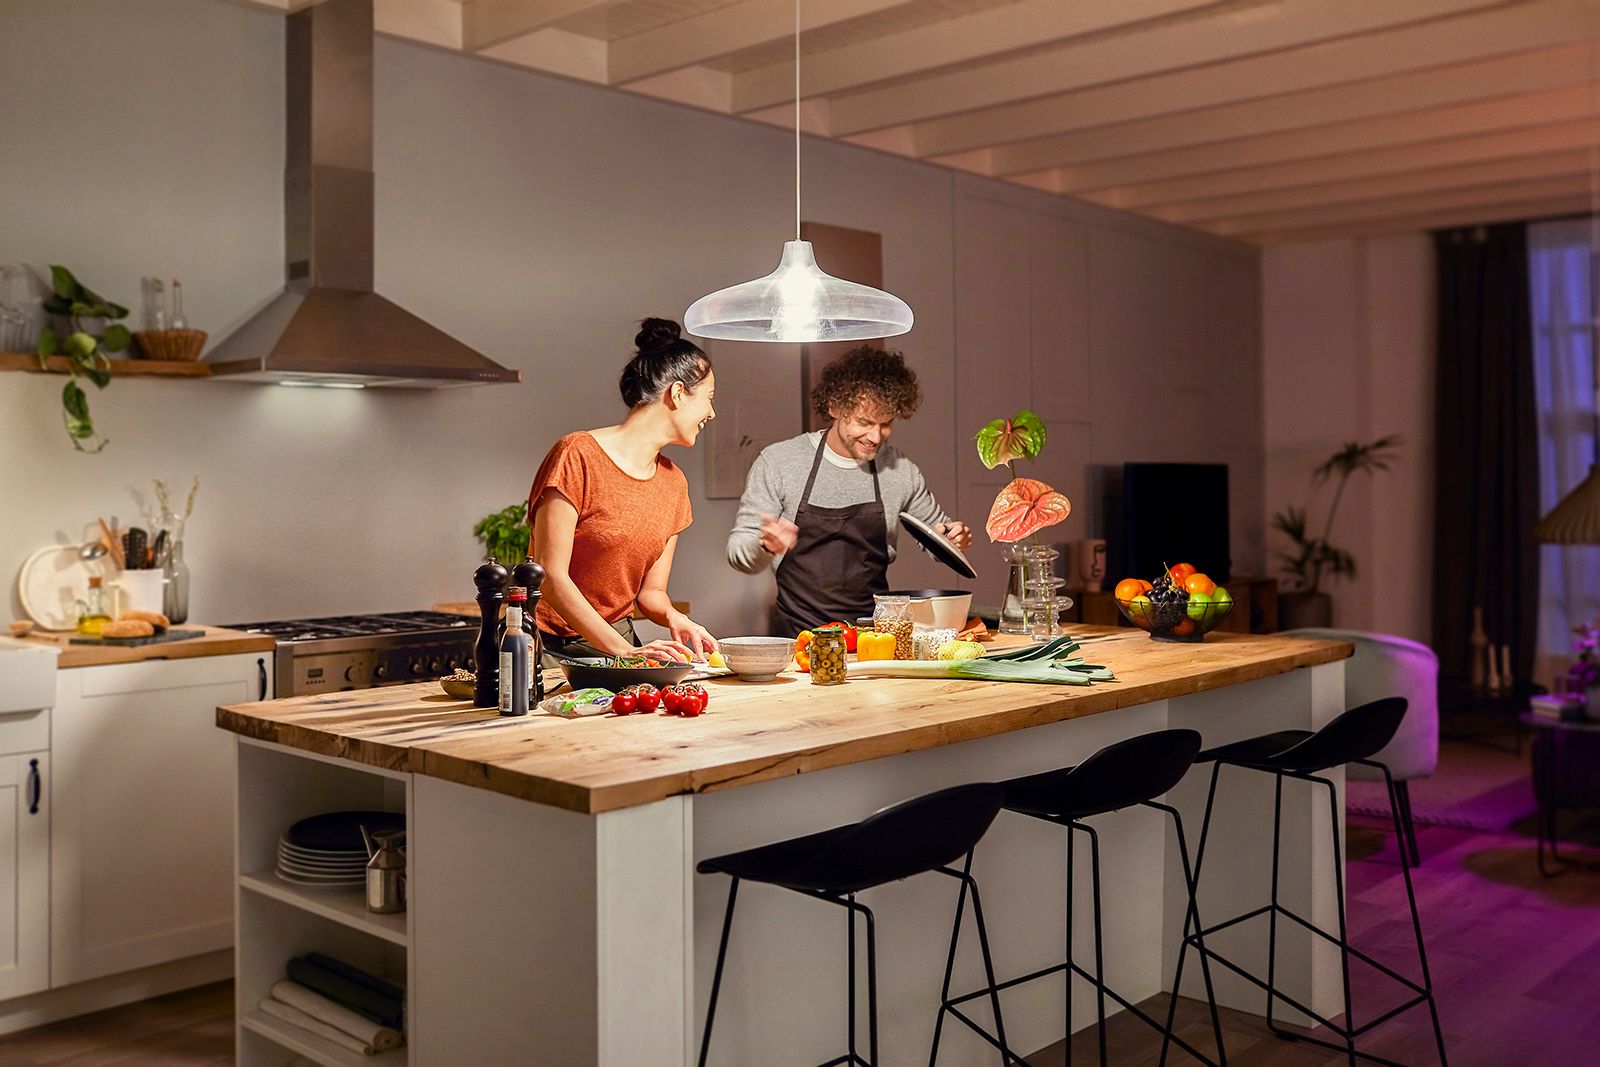 New Philips Hue lighting options include 1600 lumen bulb image 1